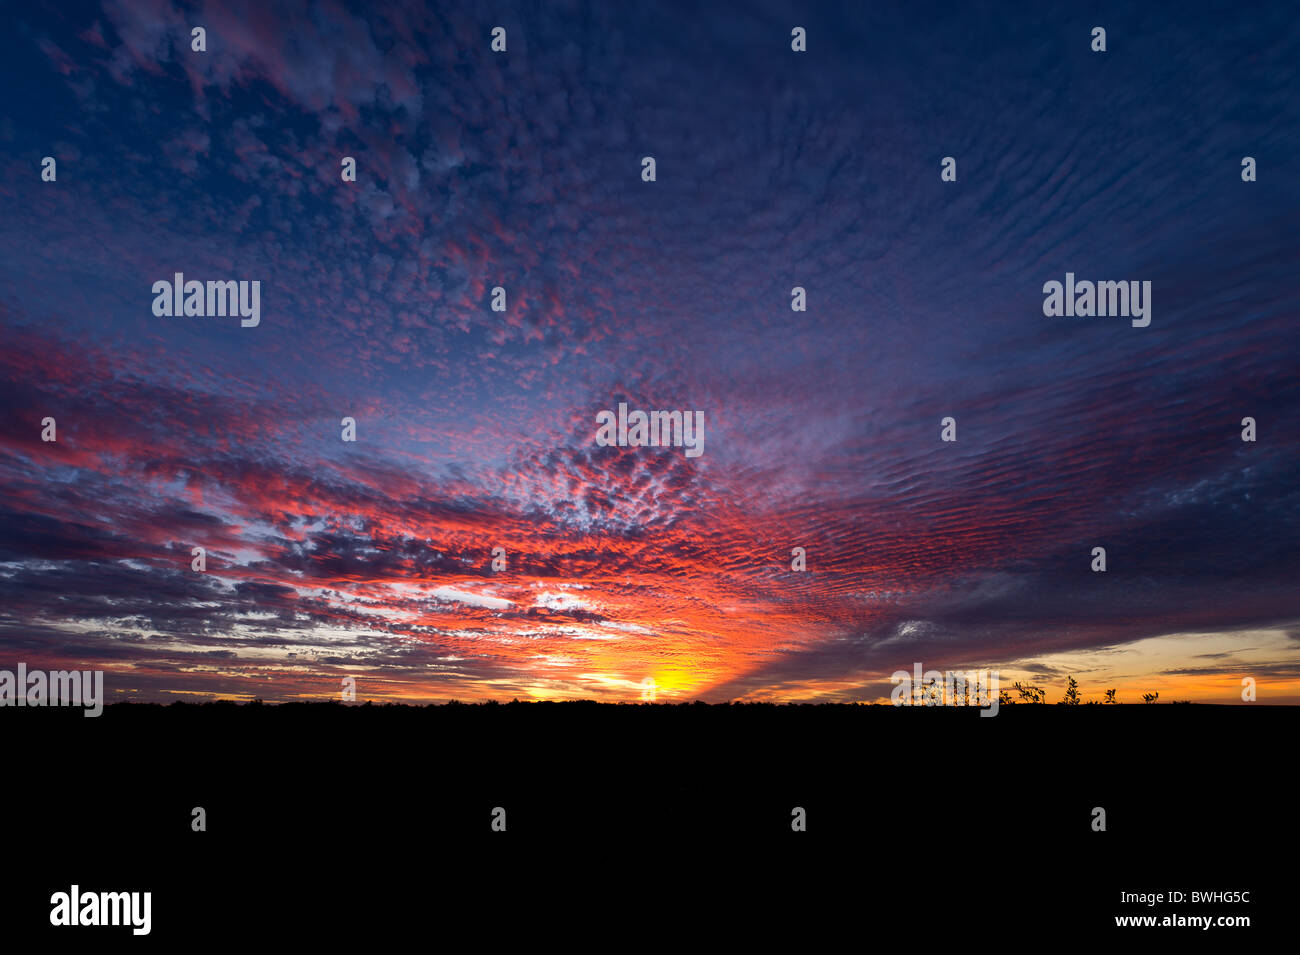 Sun setting over Australian outback landscape Stock Photo